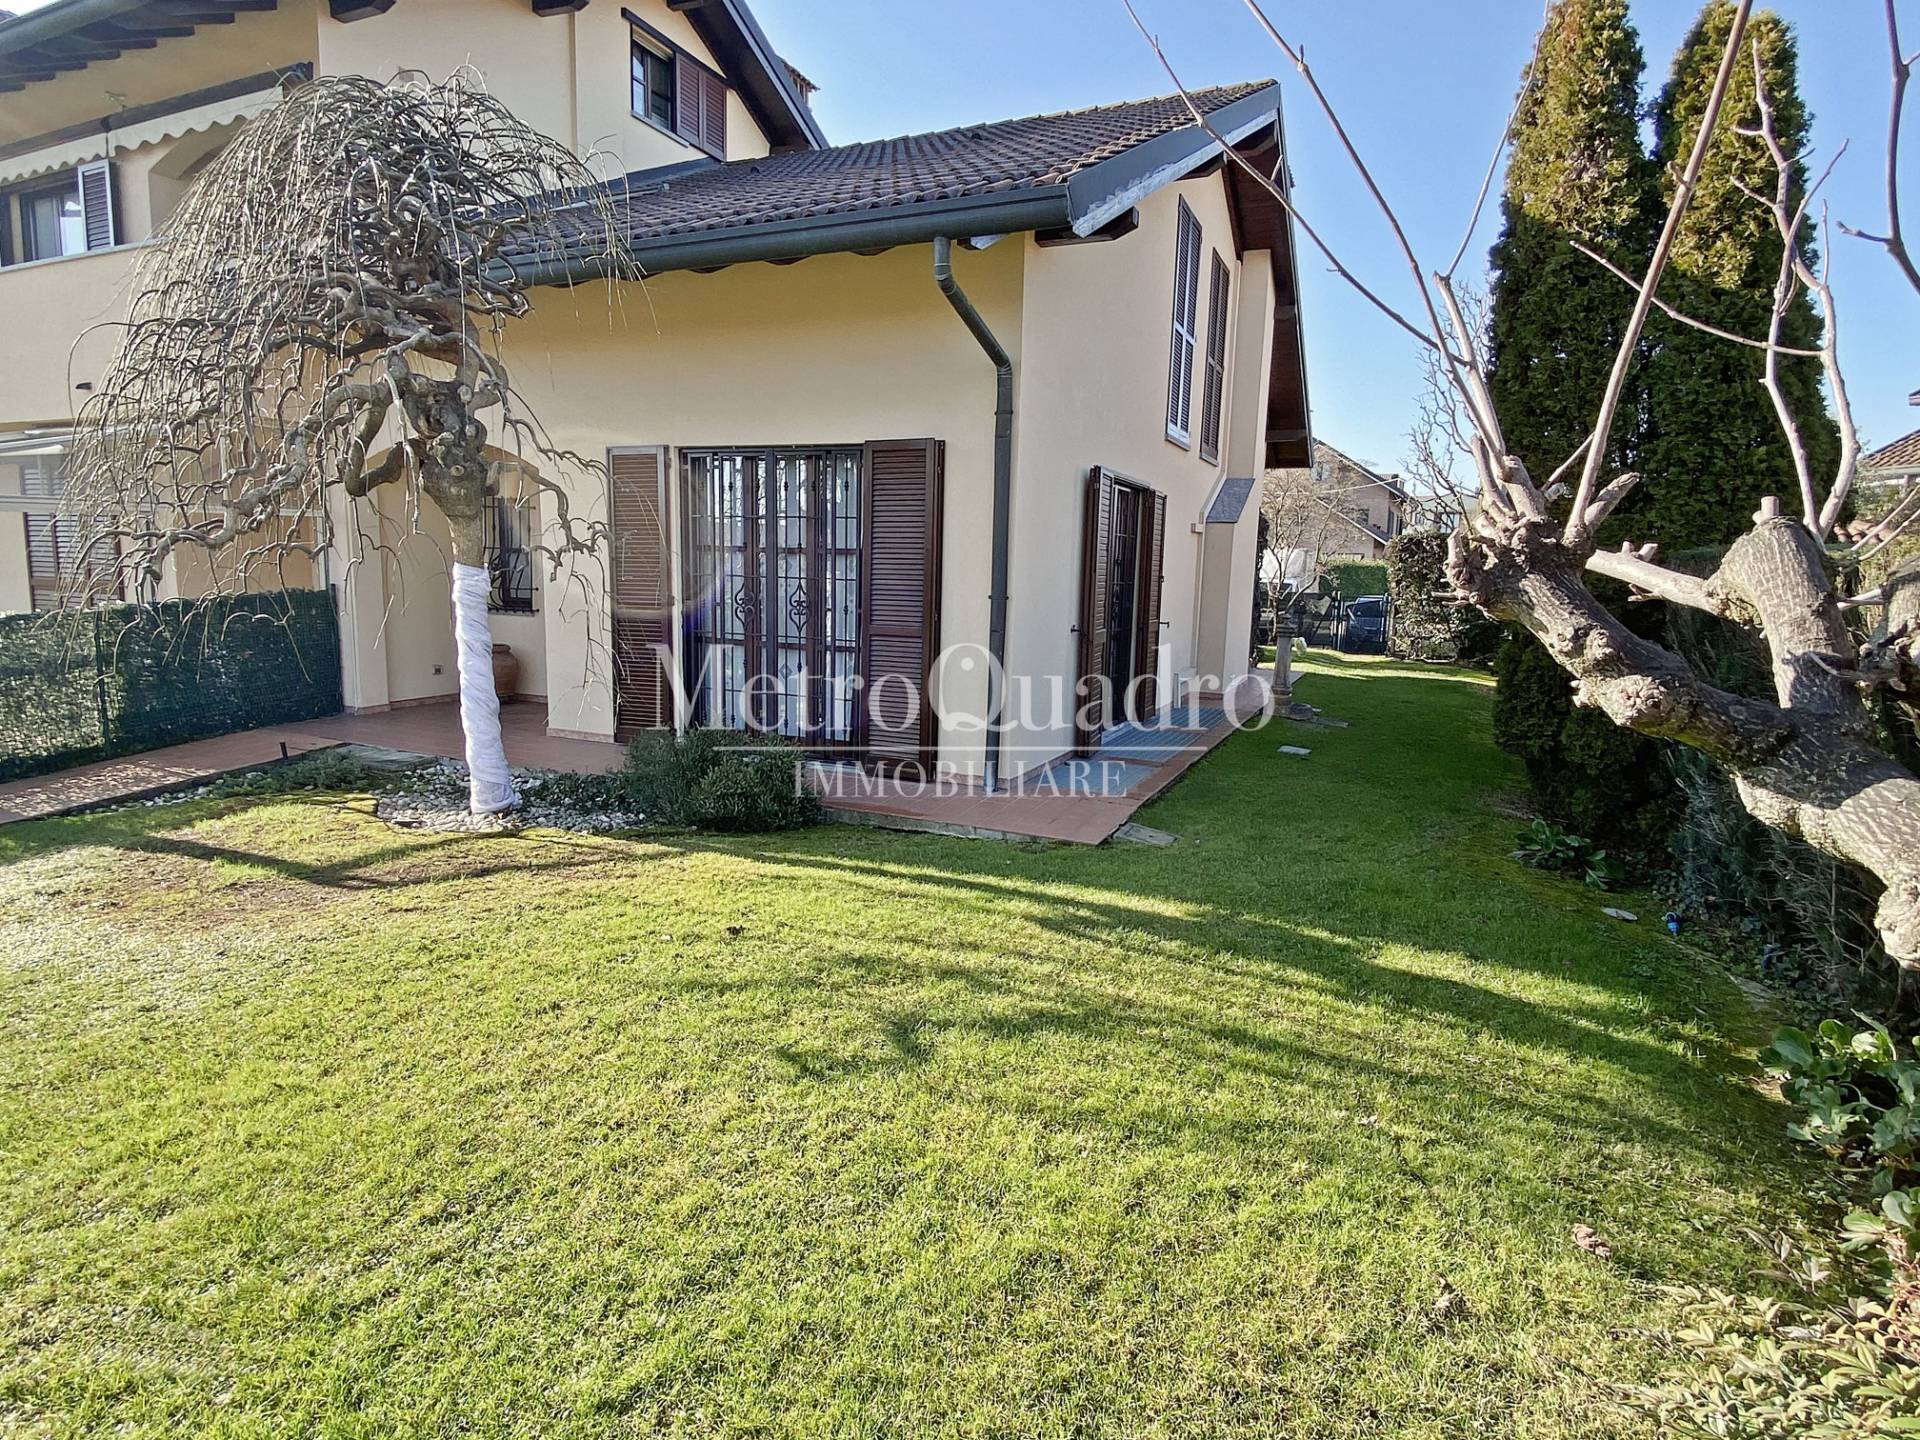 Villa in vendita a Cavenago di Brianza